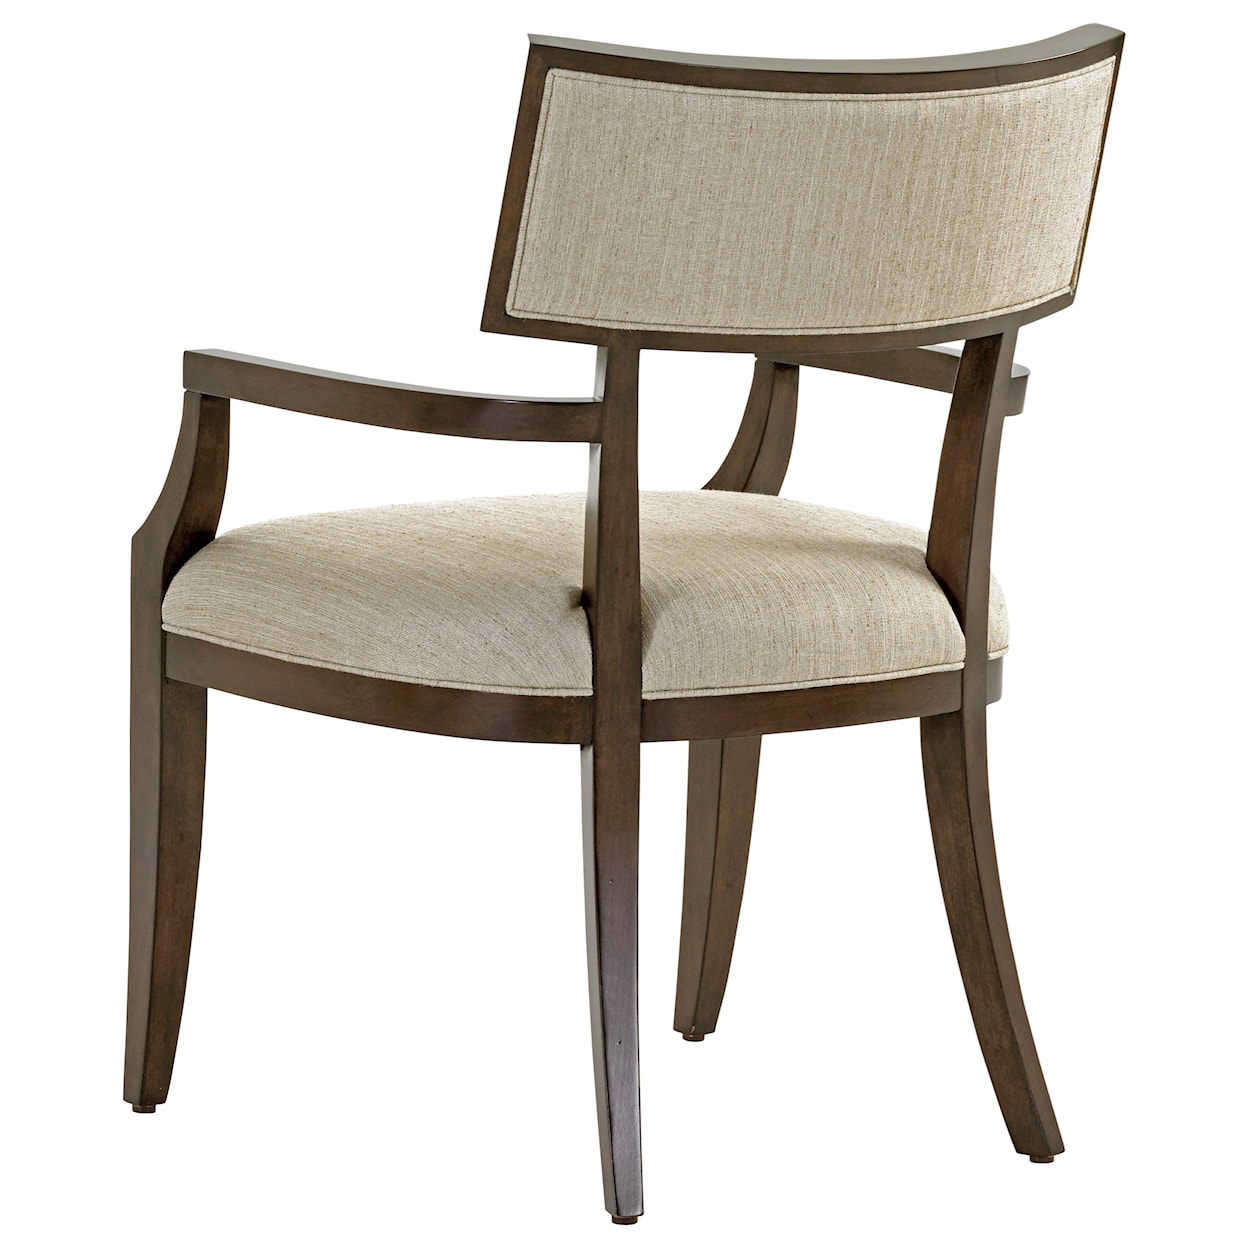 Lexington MacArthur Park Whittier Arm Chair in Wheat Fabric